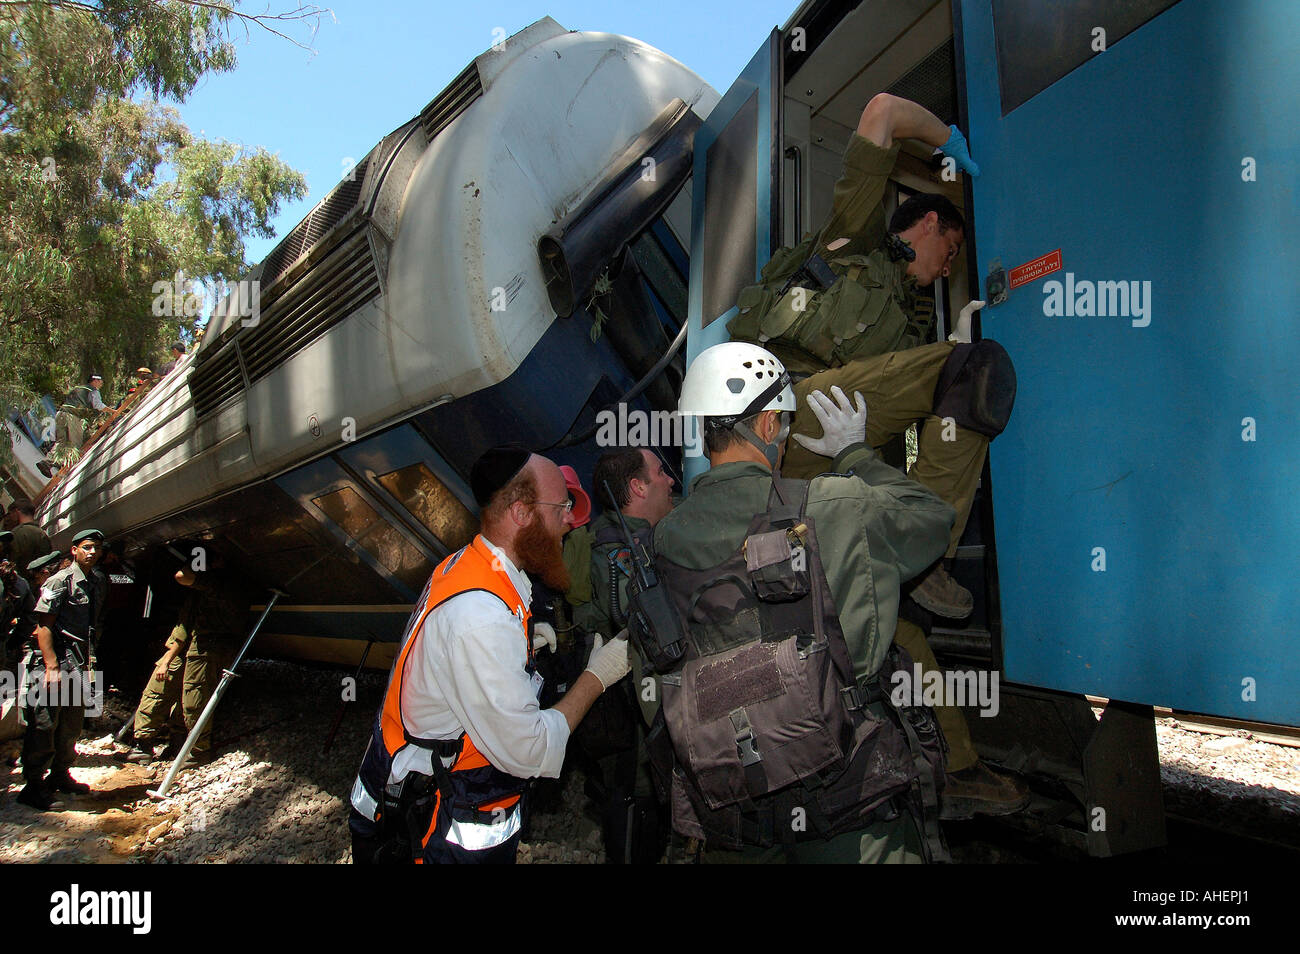 Israeli rescue forces enter an overturned wagon at a train crash site near Moshav Kfar Yehoshua in central Israel. Stock Photo